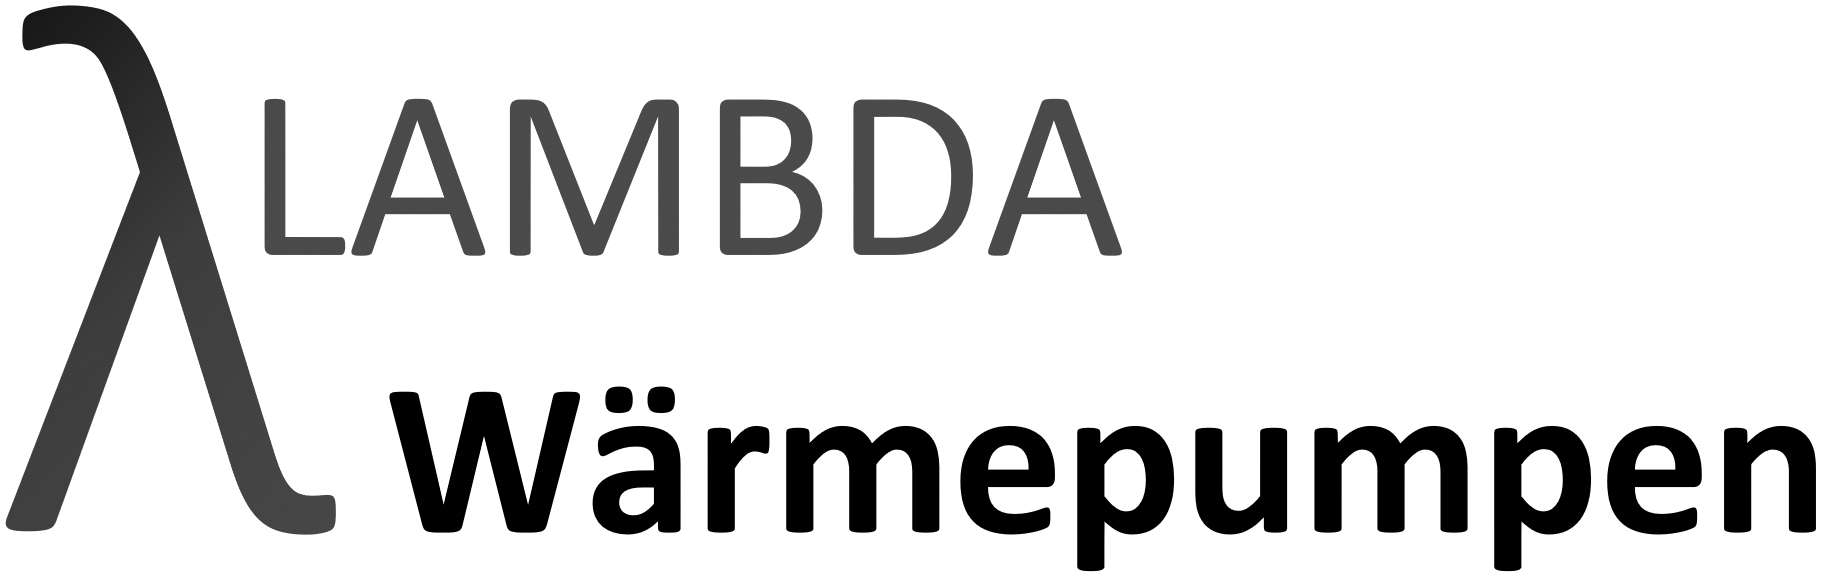 Lambda Wärmepumpen Logo in Grau